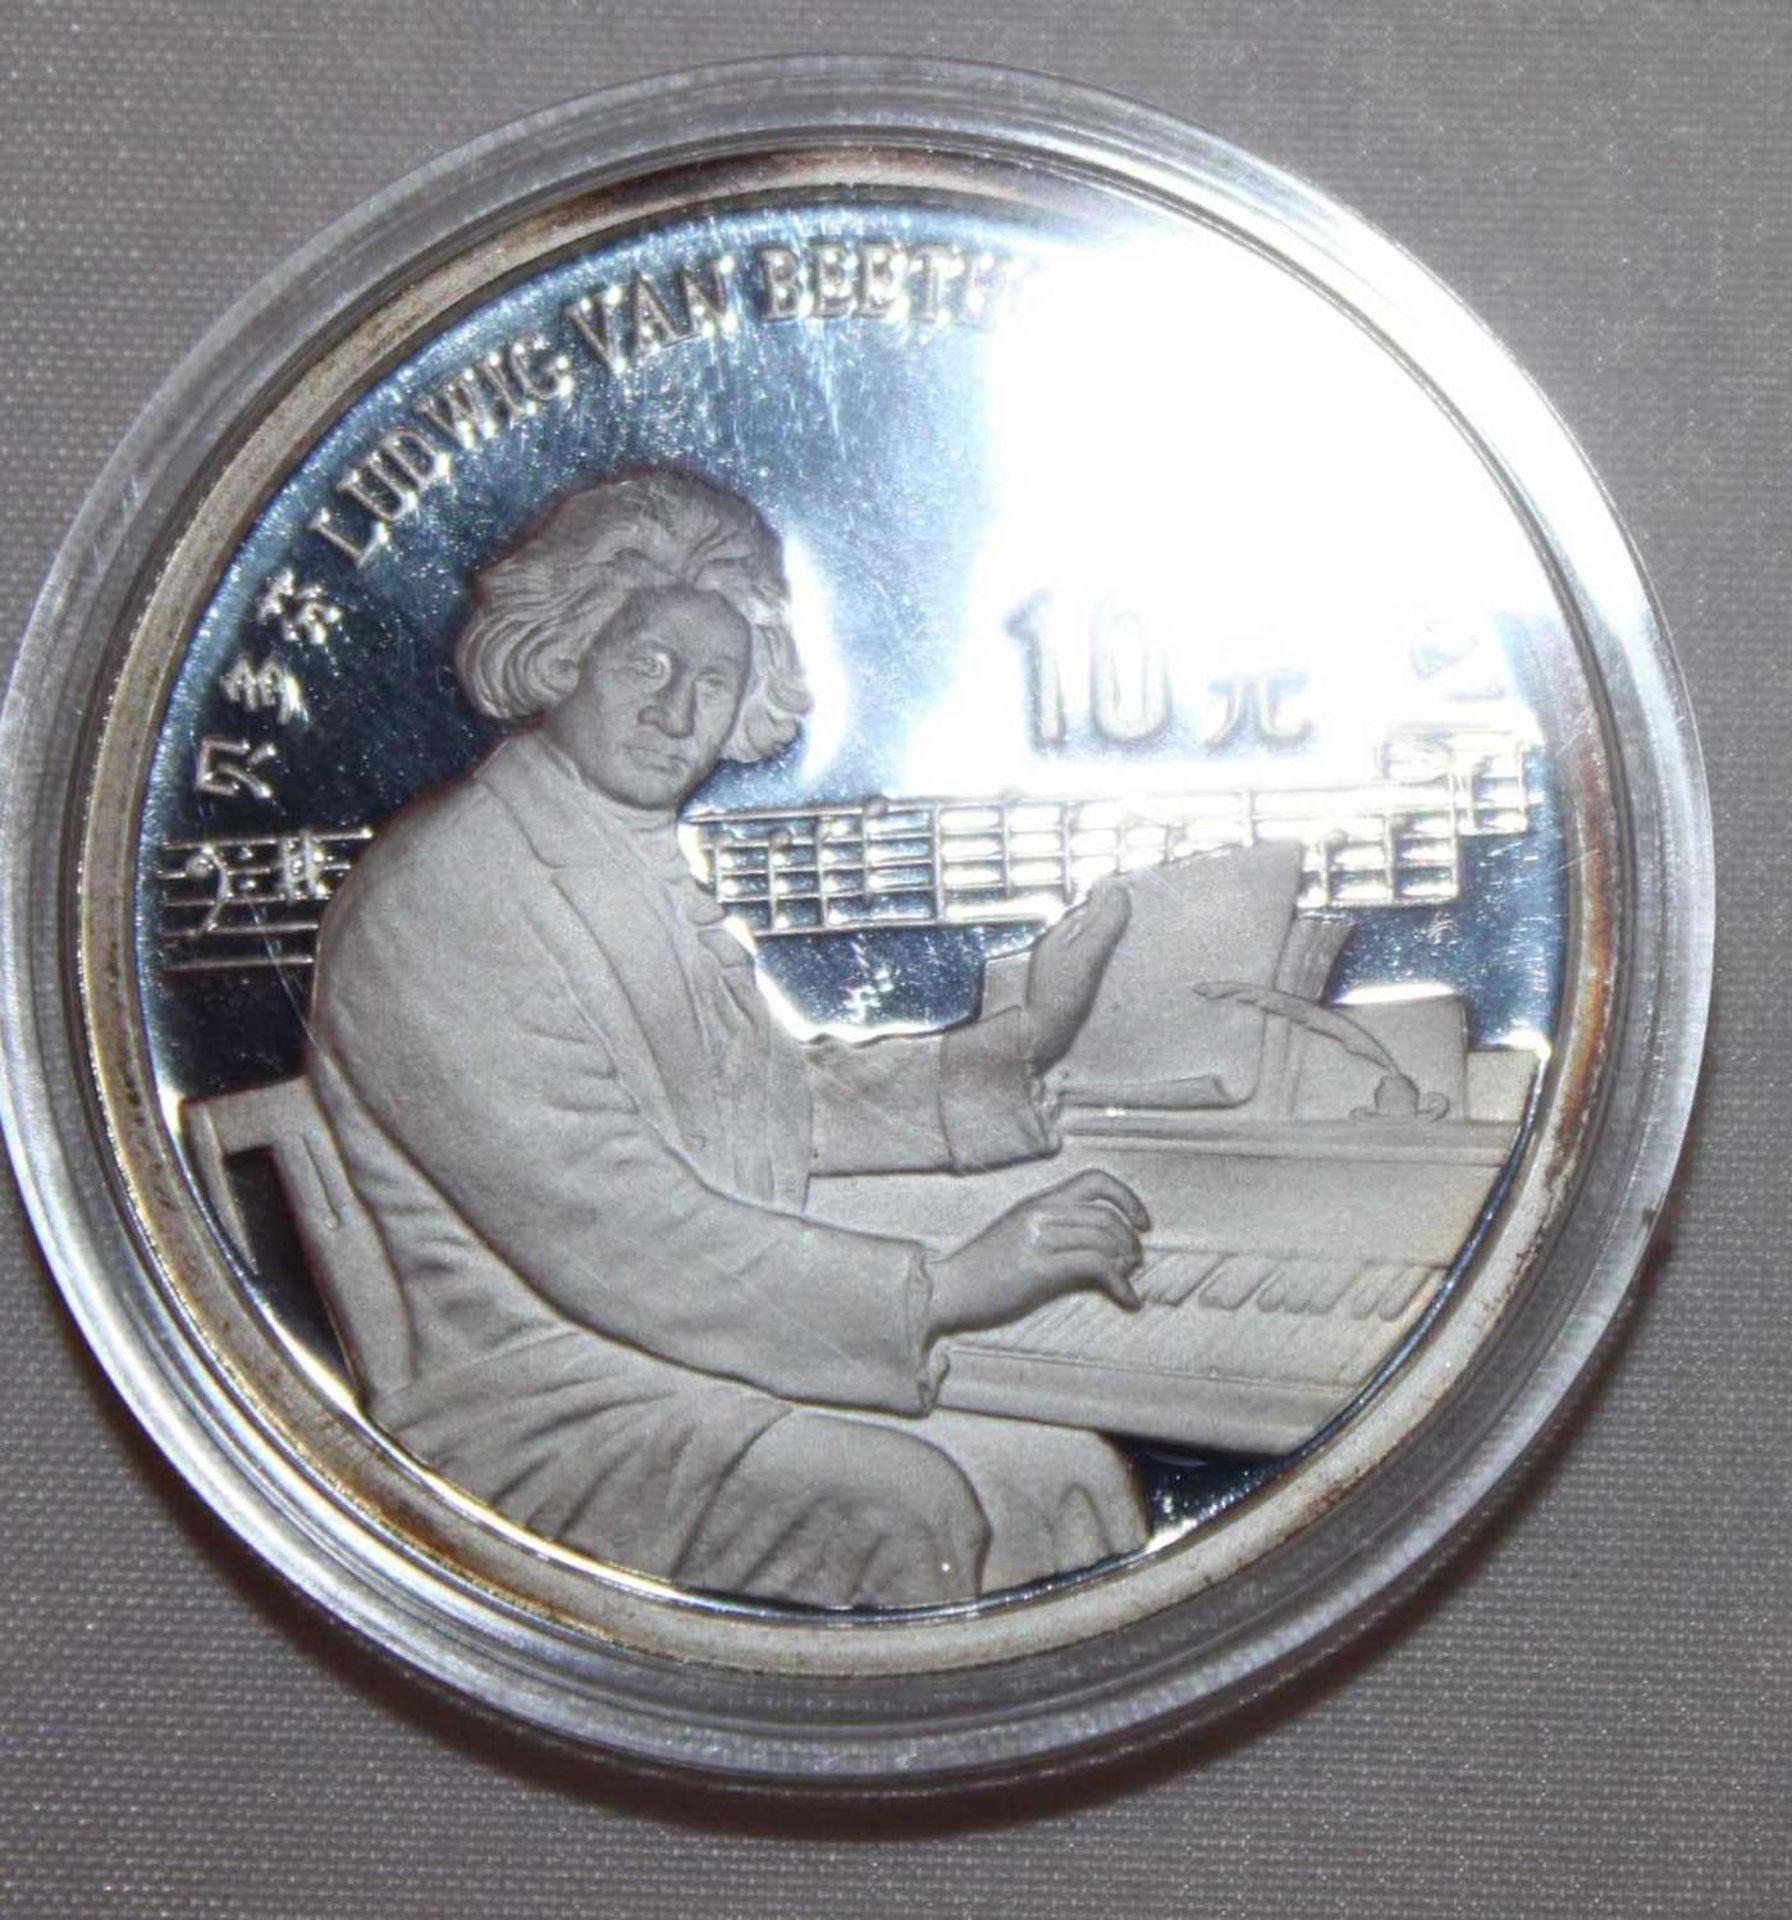 China 1990, 10 Yuan - Silbermünze "Ludwig van Beethoven". Silber 925. Gewicht: 27 gr.. In Kapsel.